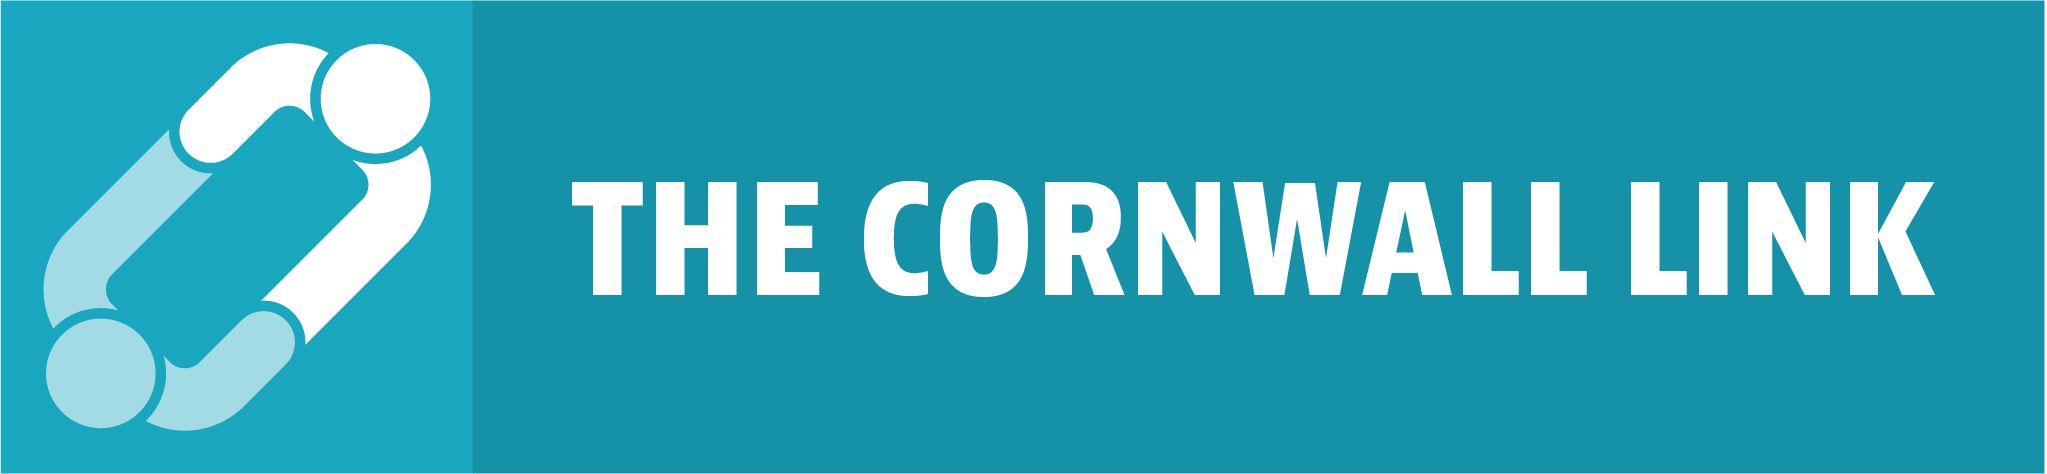 Cornwall Link banner. 